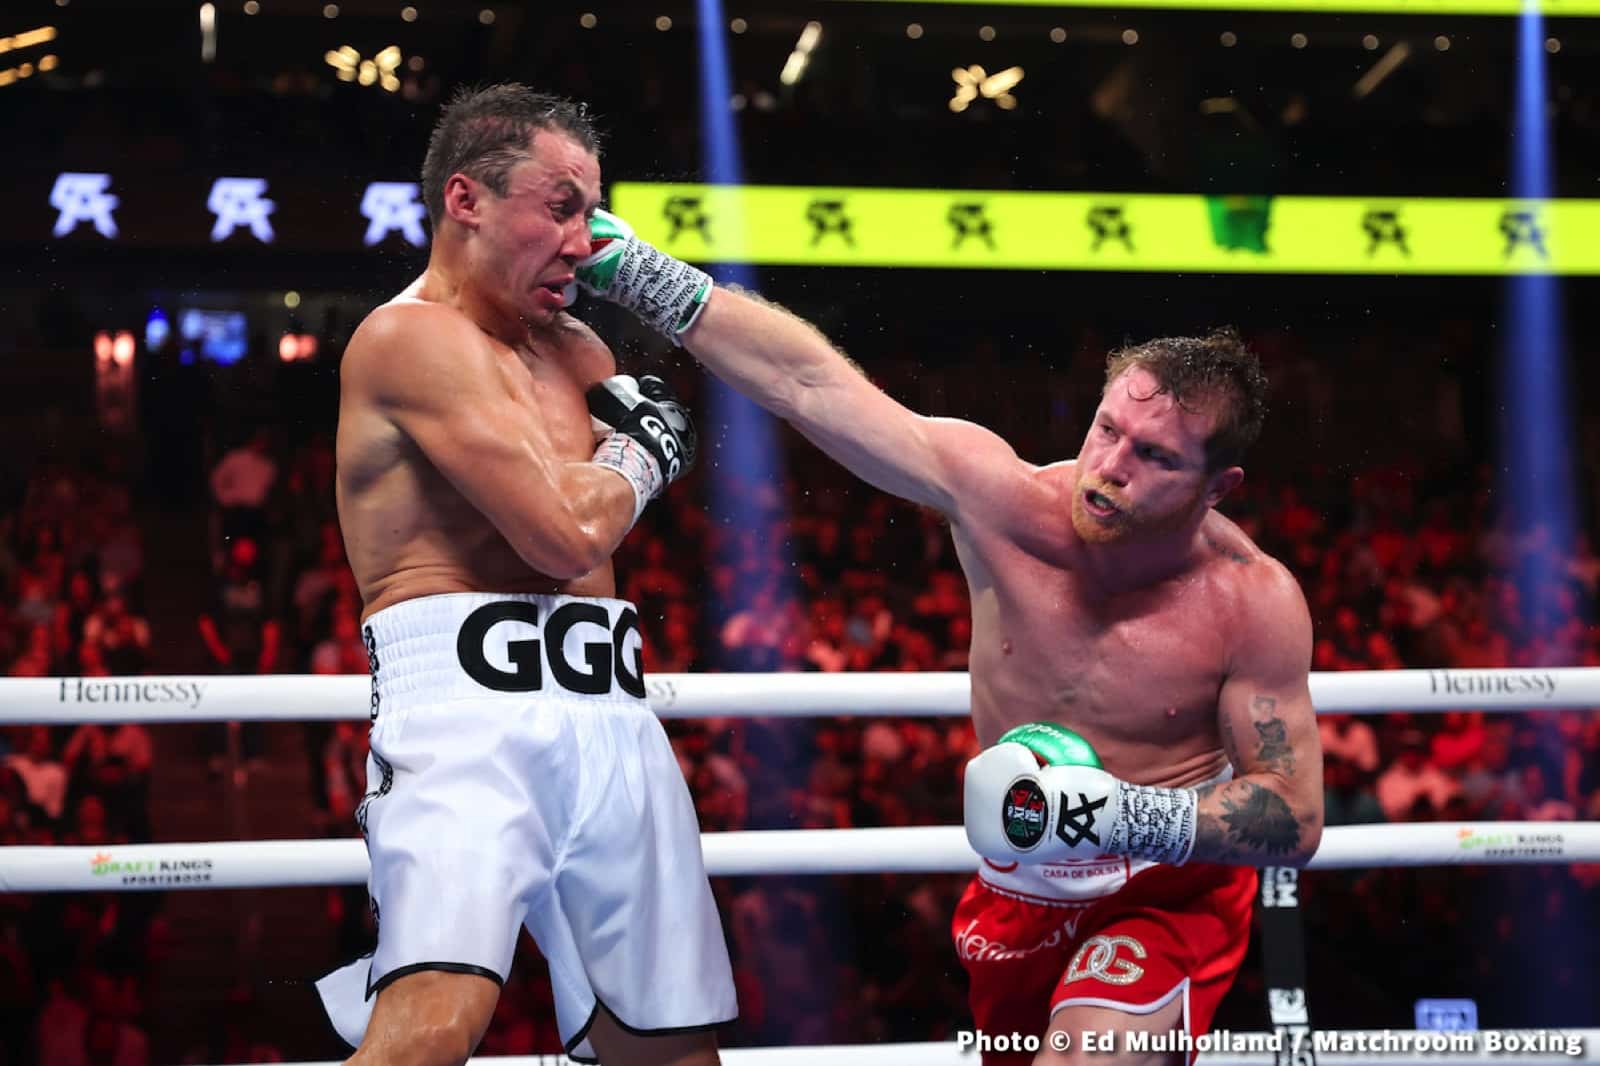 Gennadiy Golovkin boxing image / photo